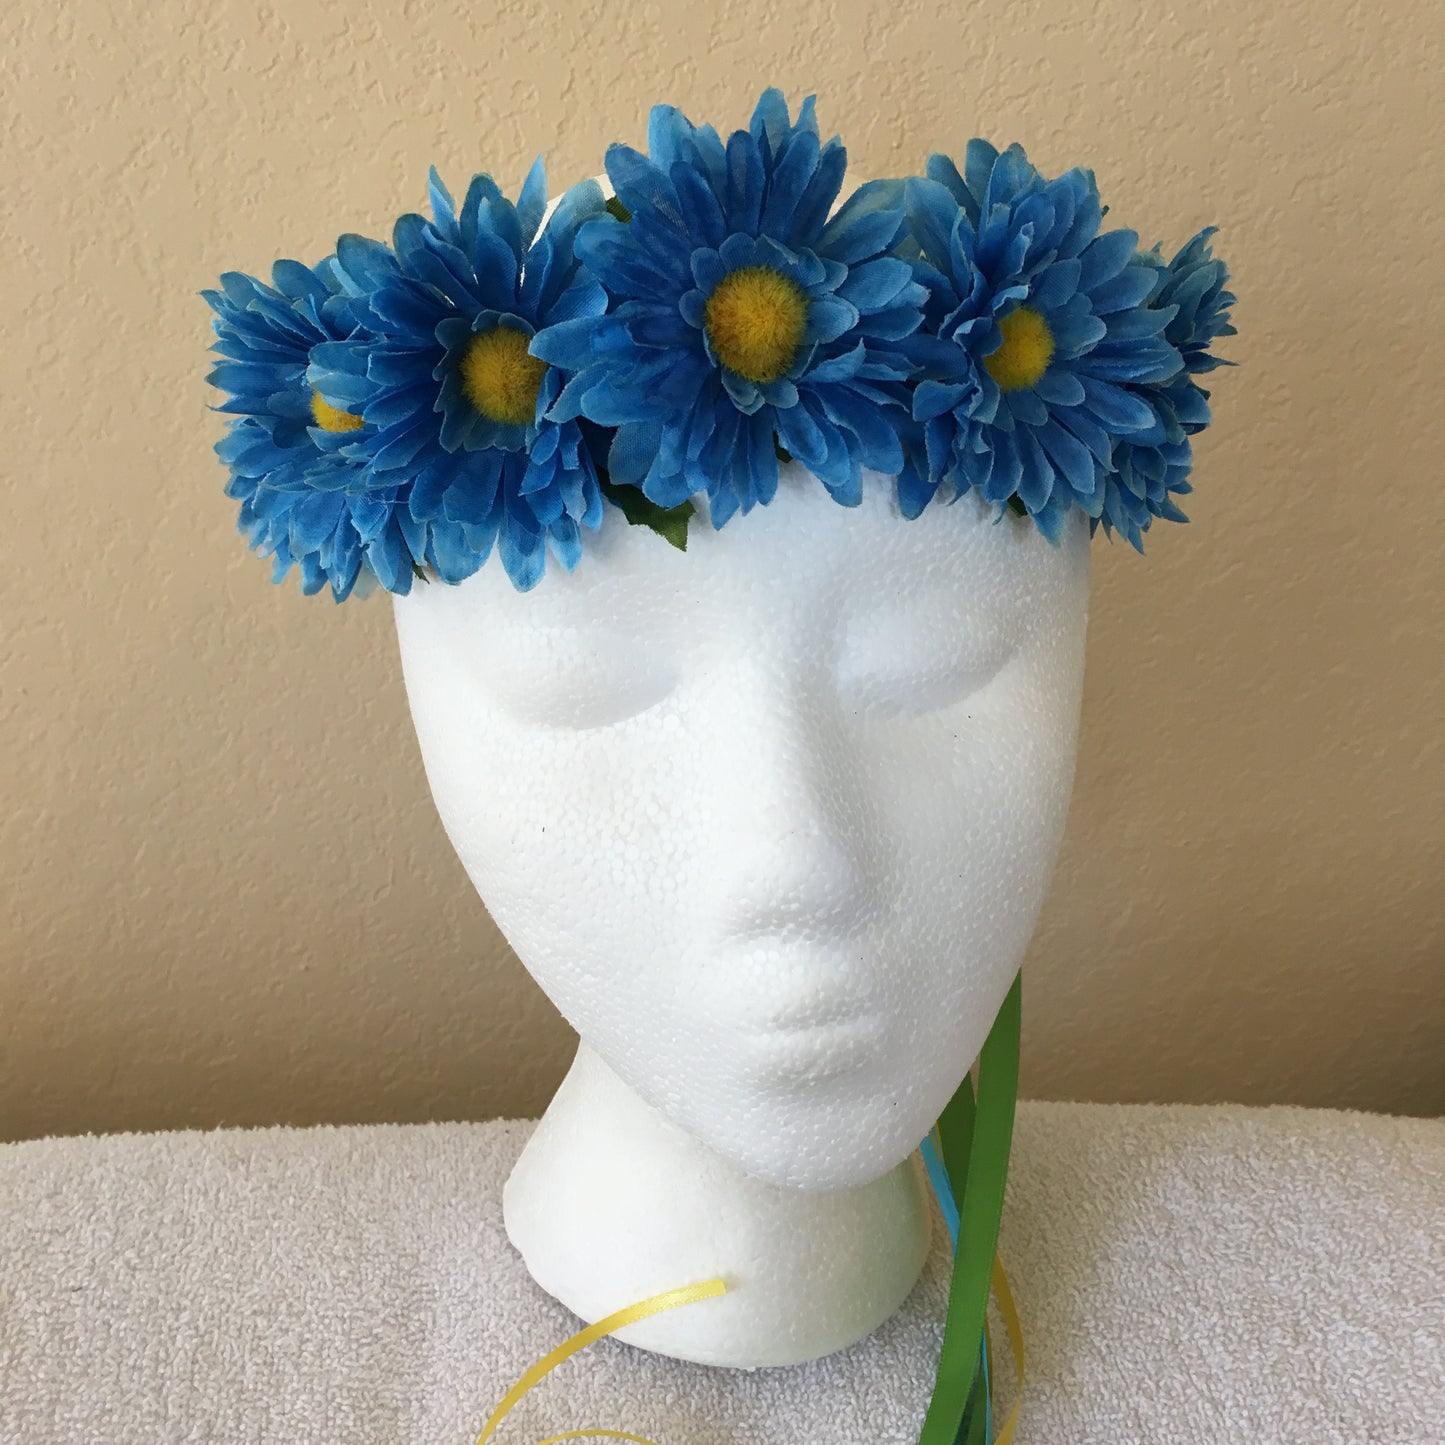 Small Wreath - All light blue daisies (2)